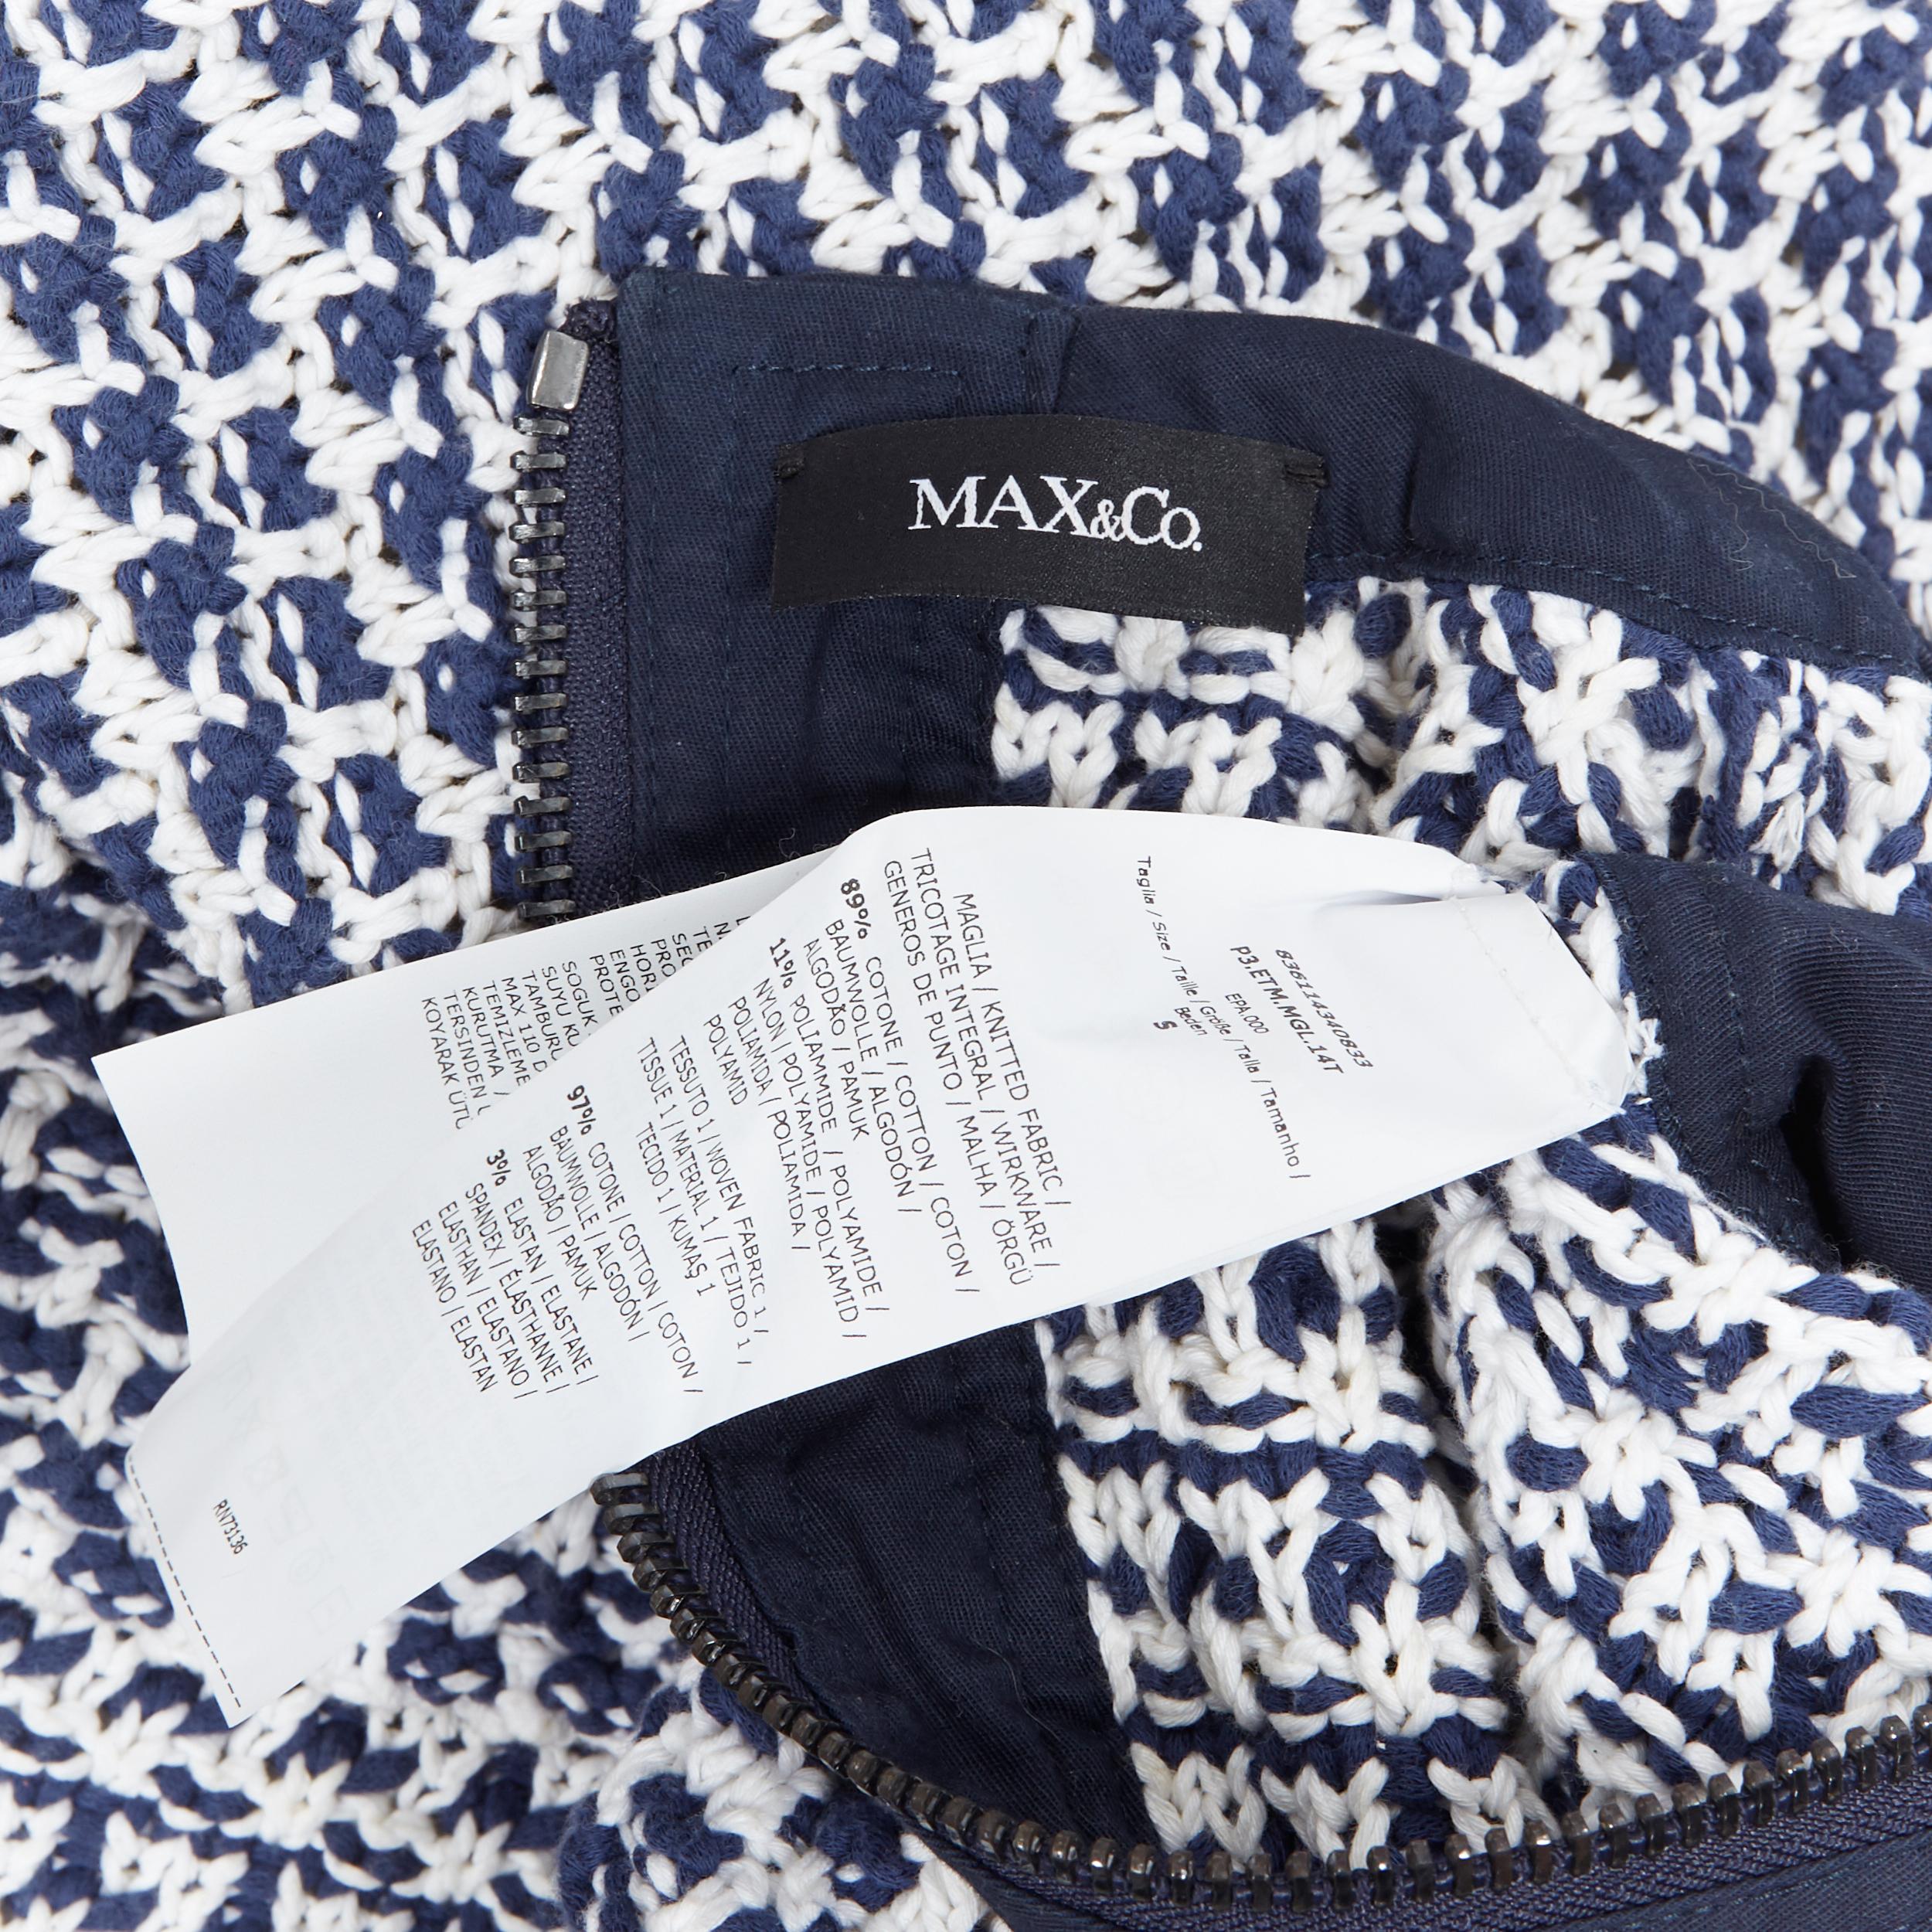 MAX & CO MAX MARA navy blue white cotton crochet knit cap sleeve crop top S 5